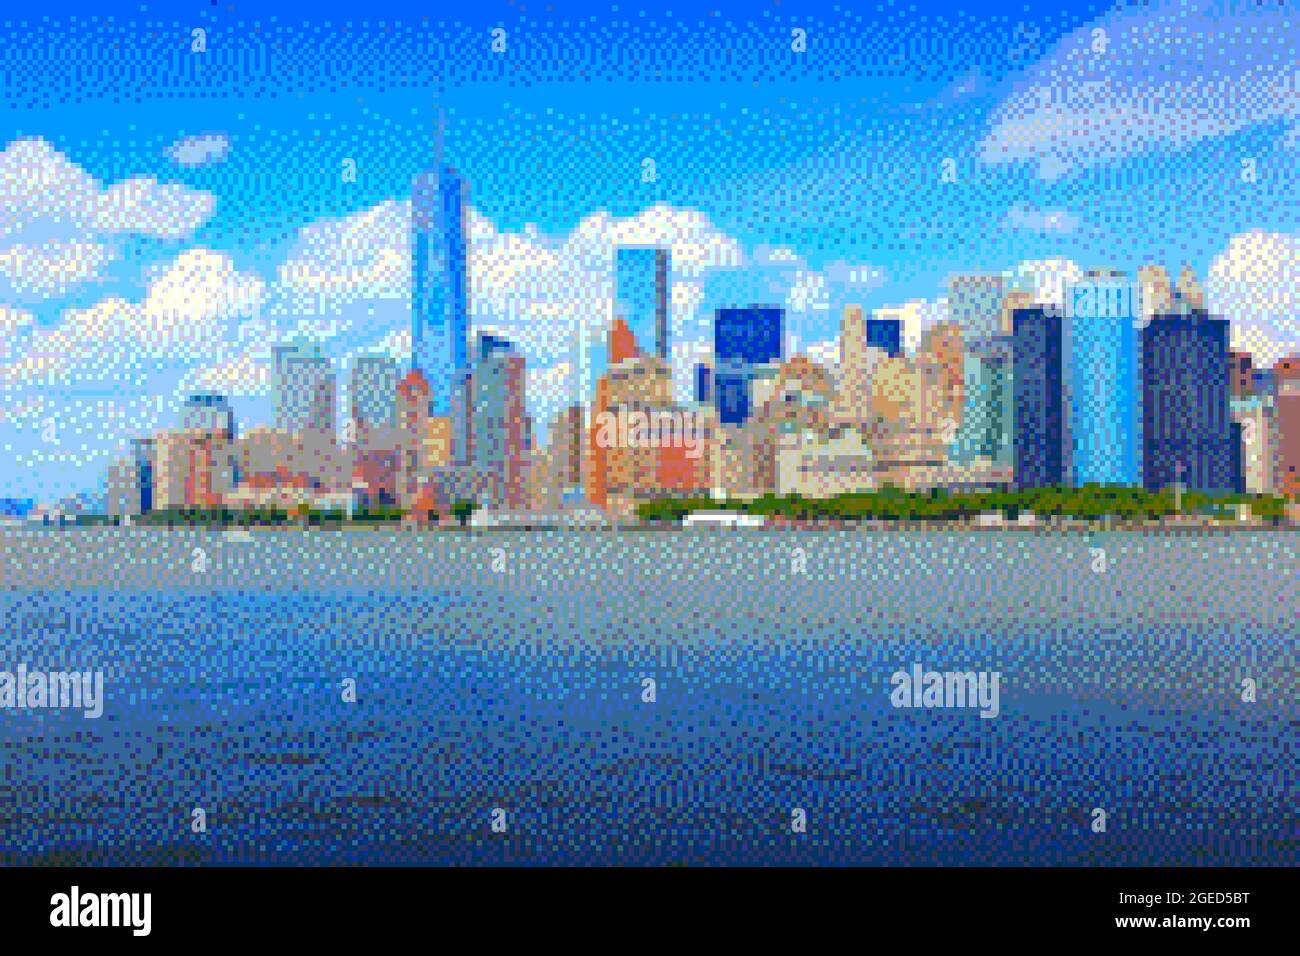 Grafica pixel ART a 8 bit. New York City - skyline di Manhattan. Foto Stock